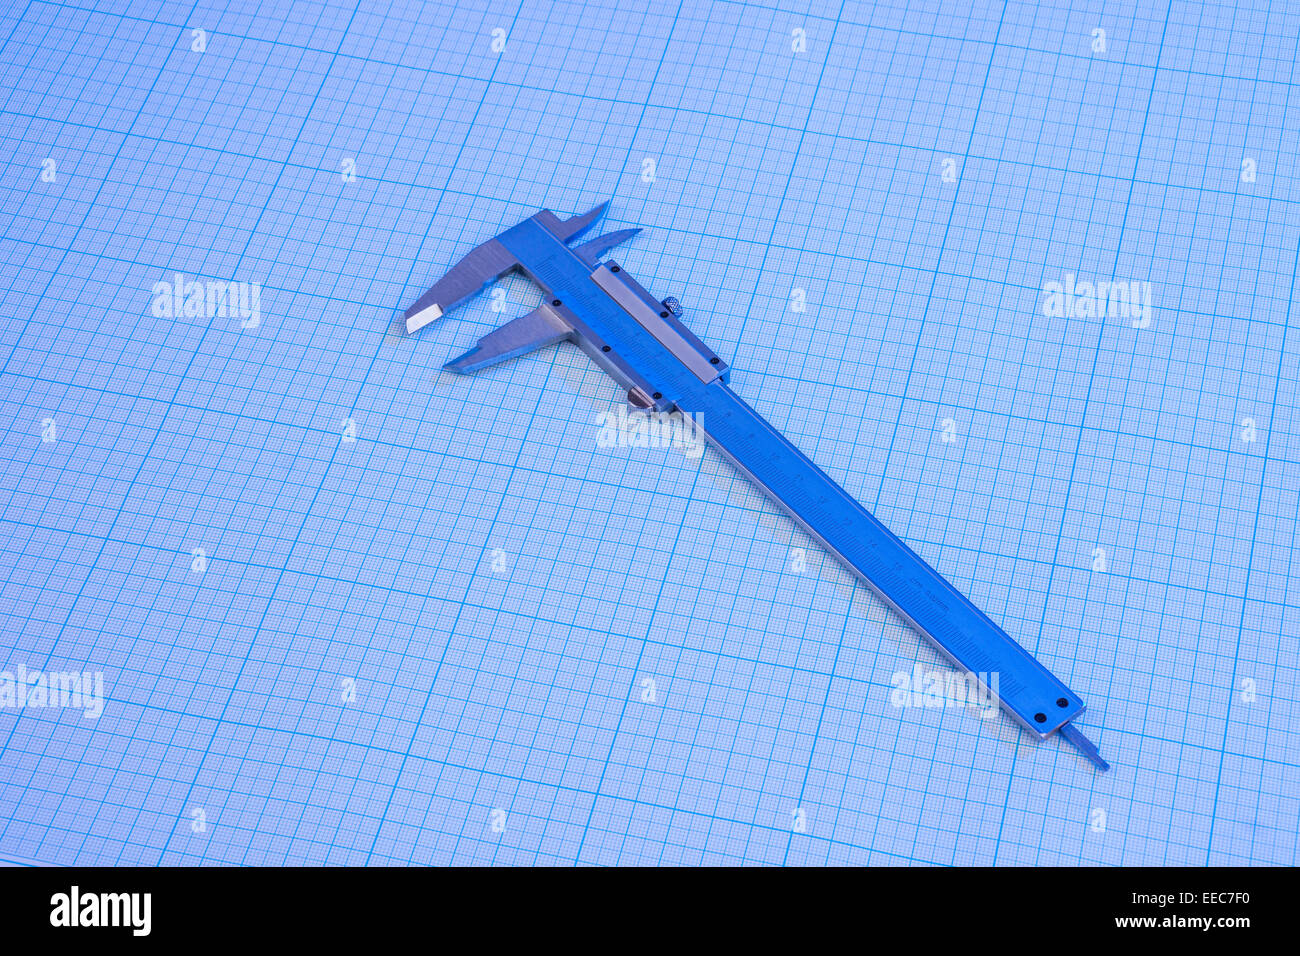 Vernier-caliper on graph paper under blue light Stock Photo